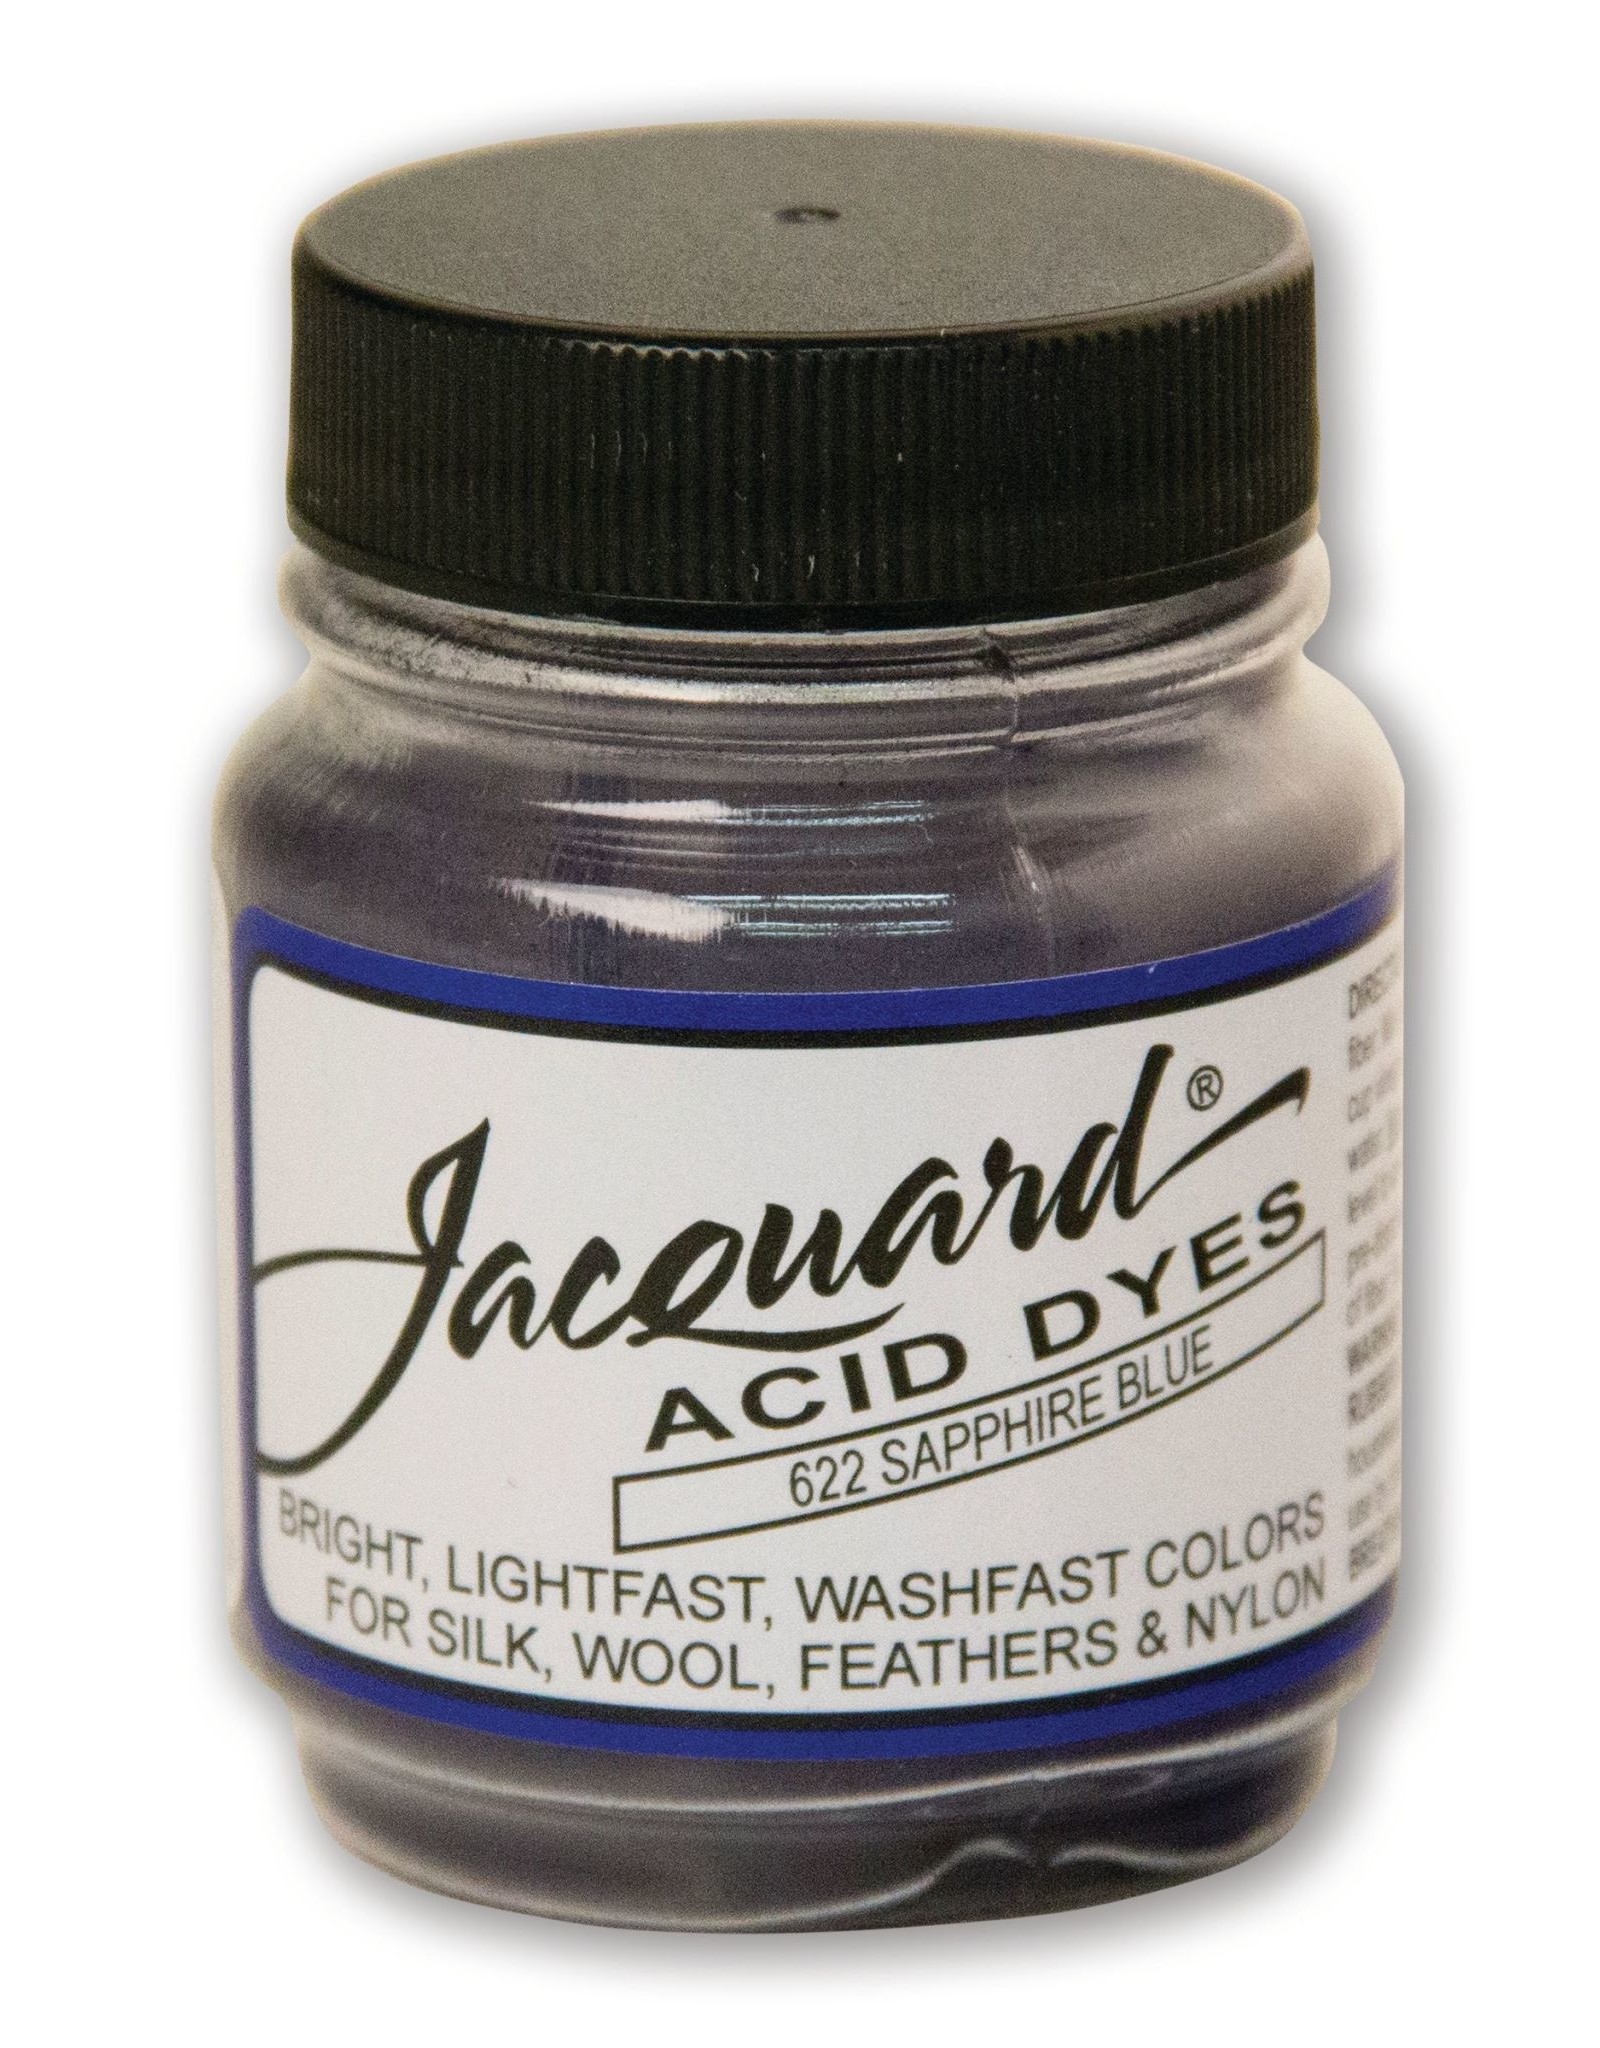 Jacquard Jacquard Acid Dye, #622 Sapphire Blue ½oz